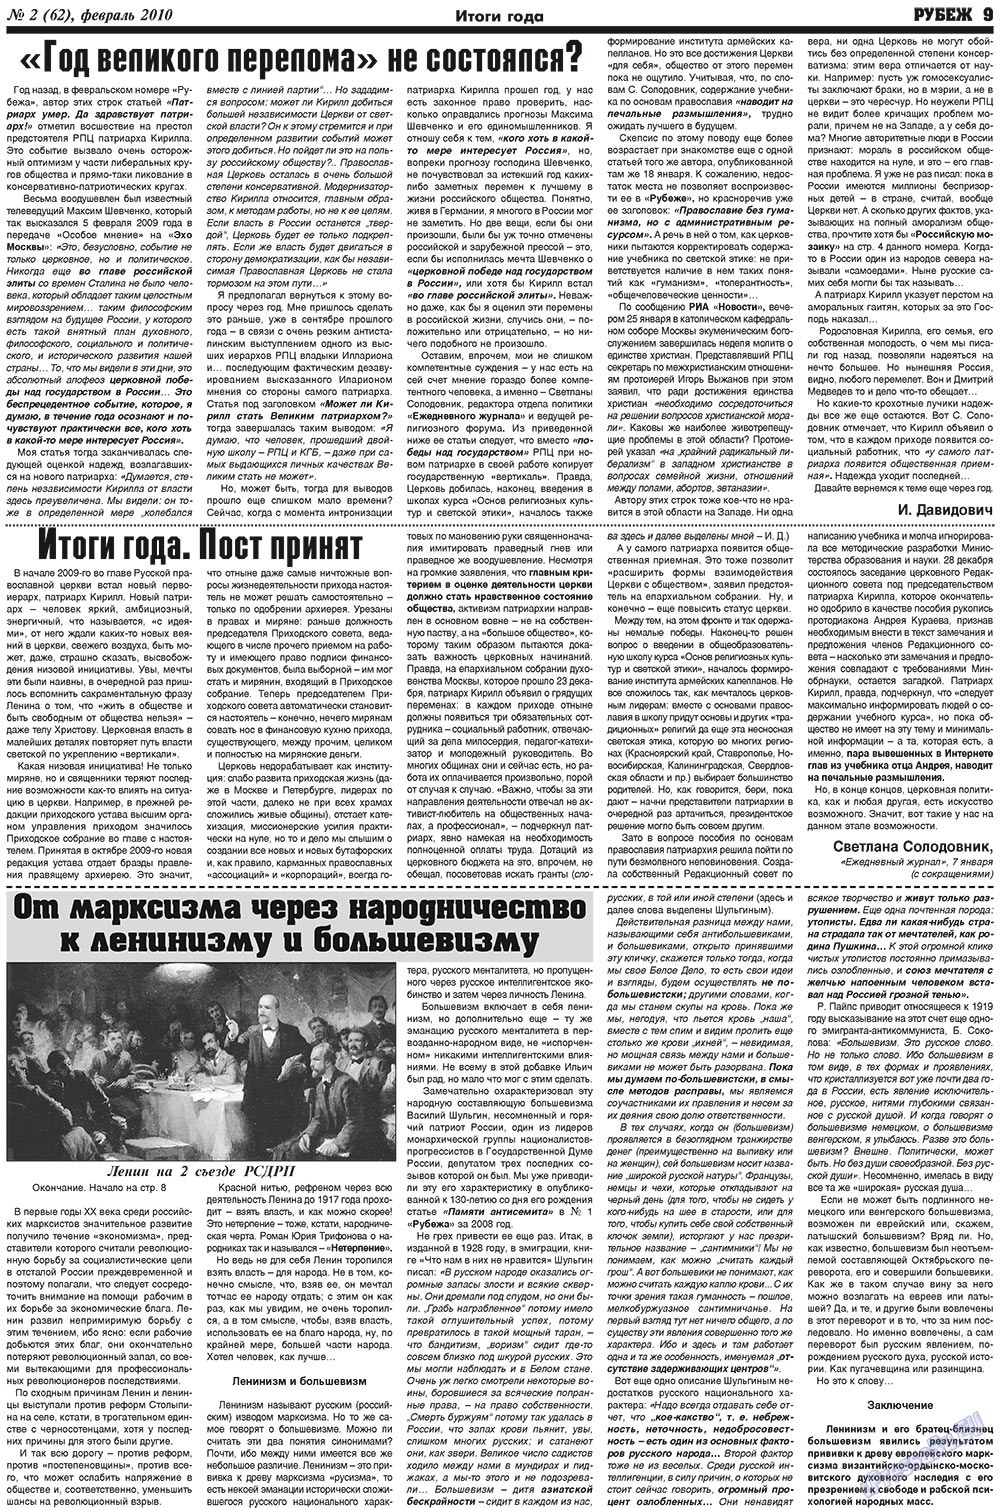 Рубеж, газета. 2010 №2 стр.9